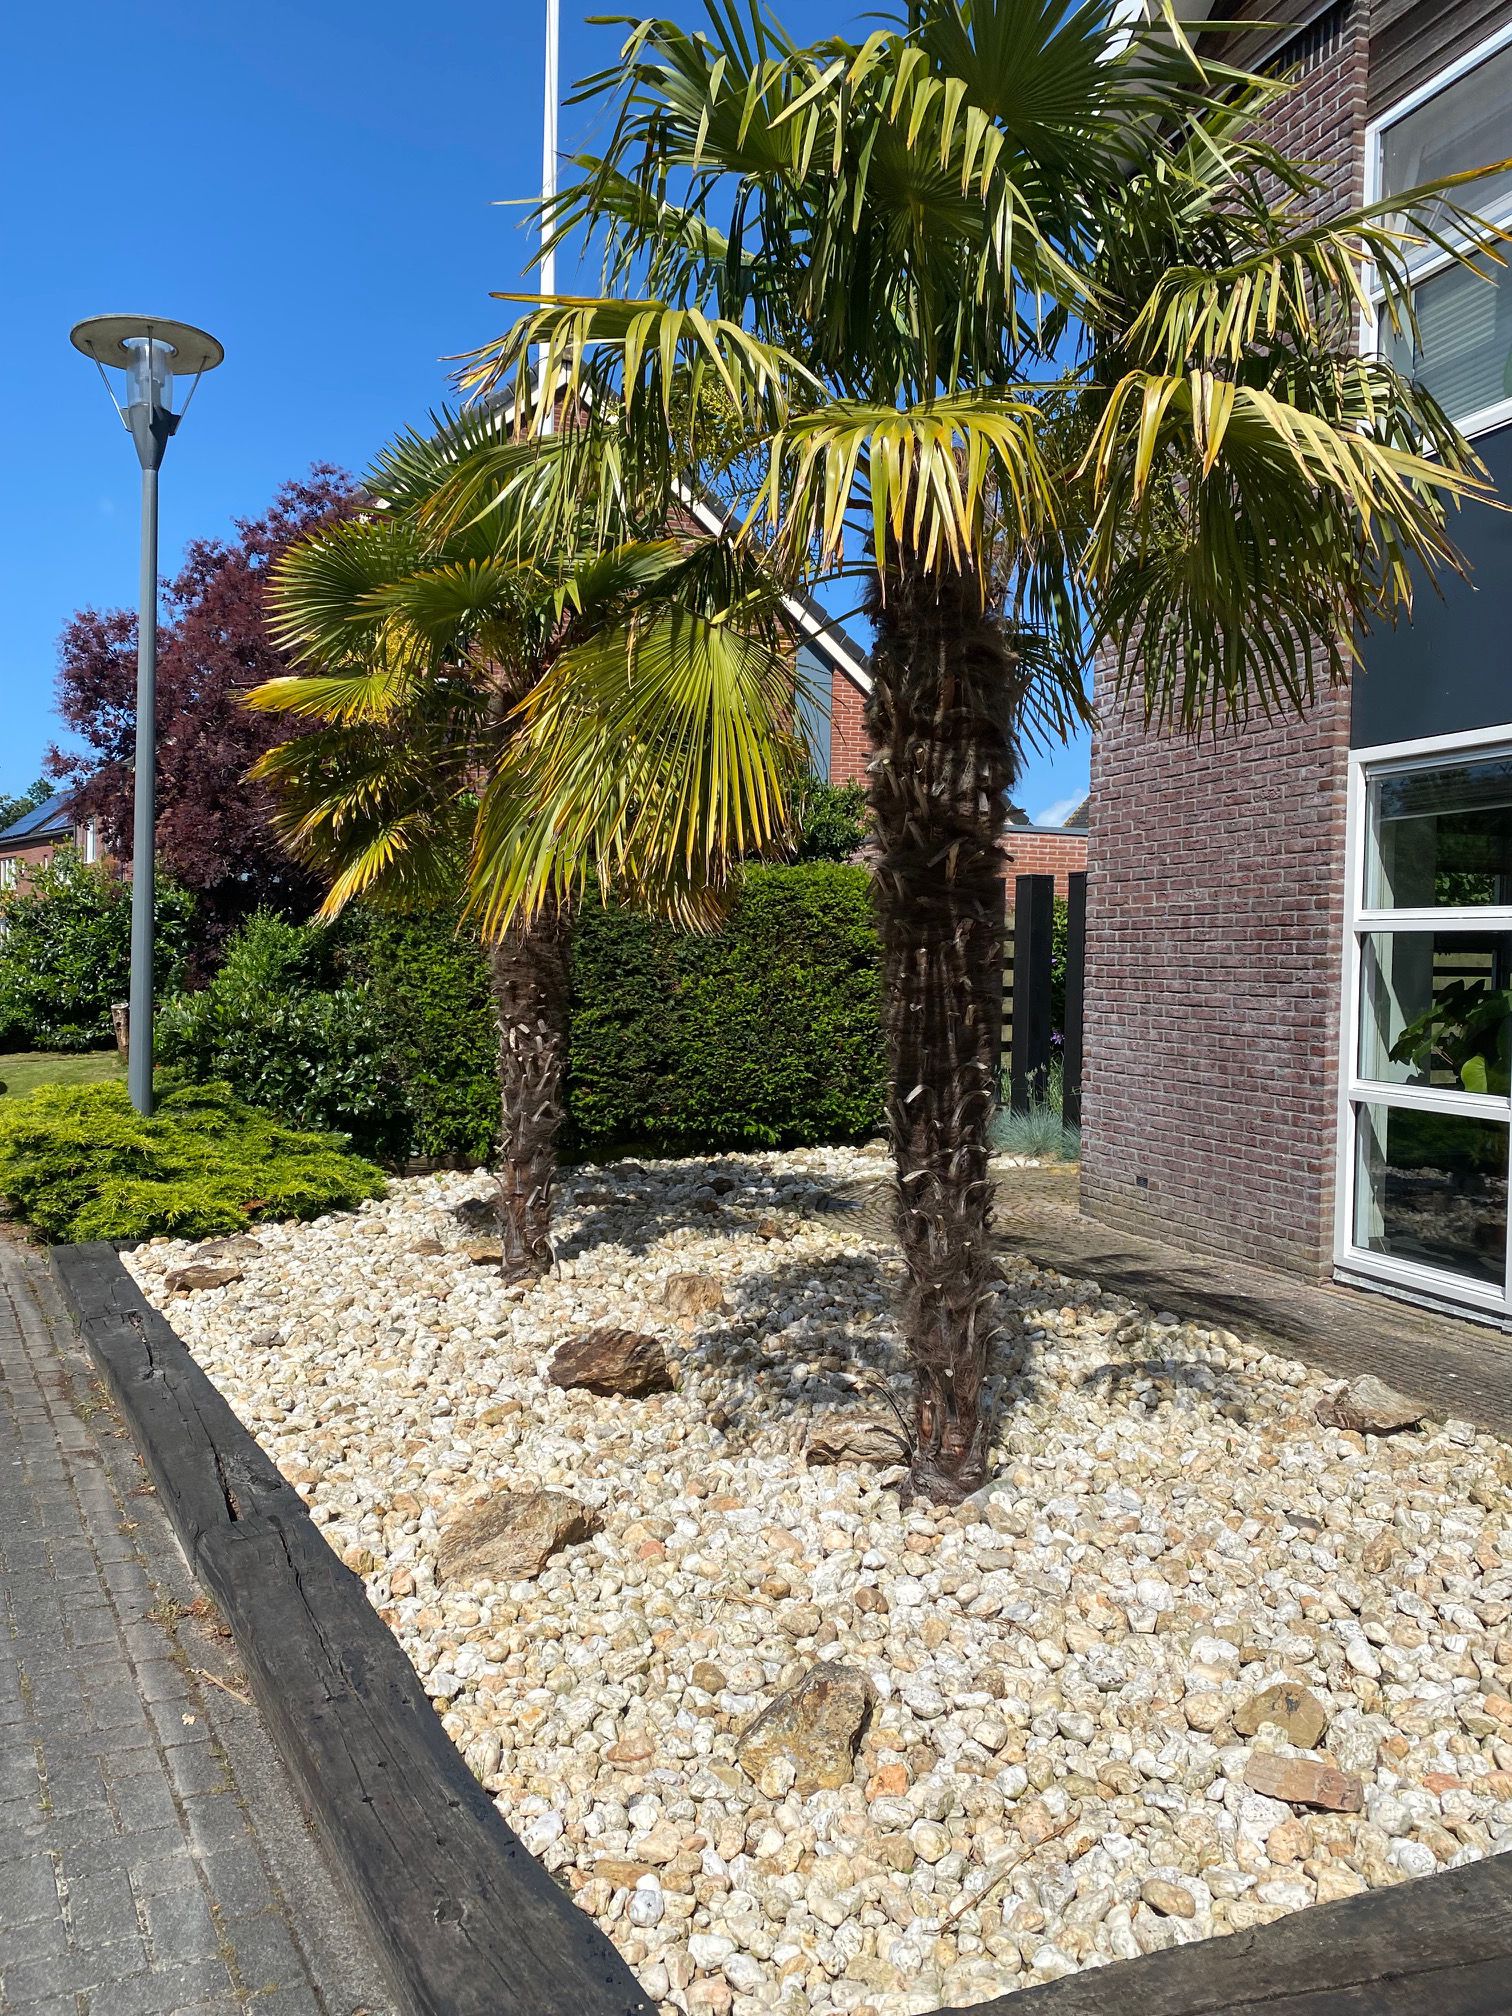 chinese palm in nederlandse tuin combinatie met wit grind